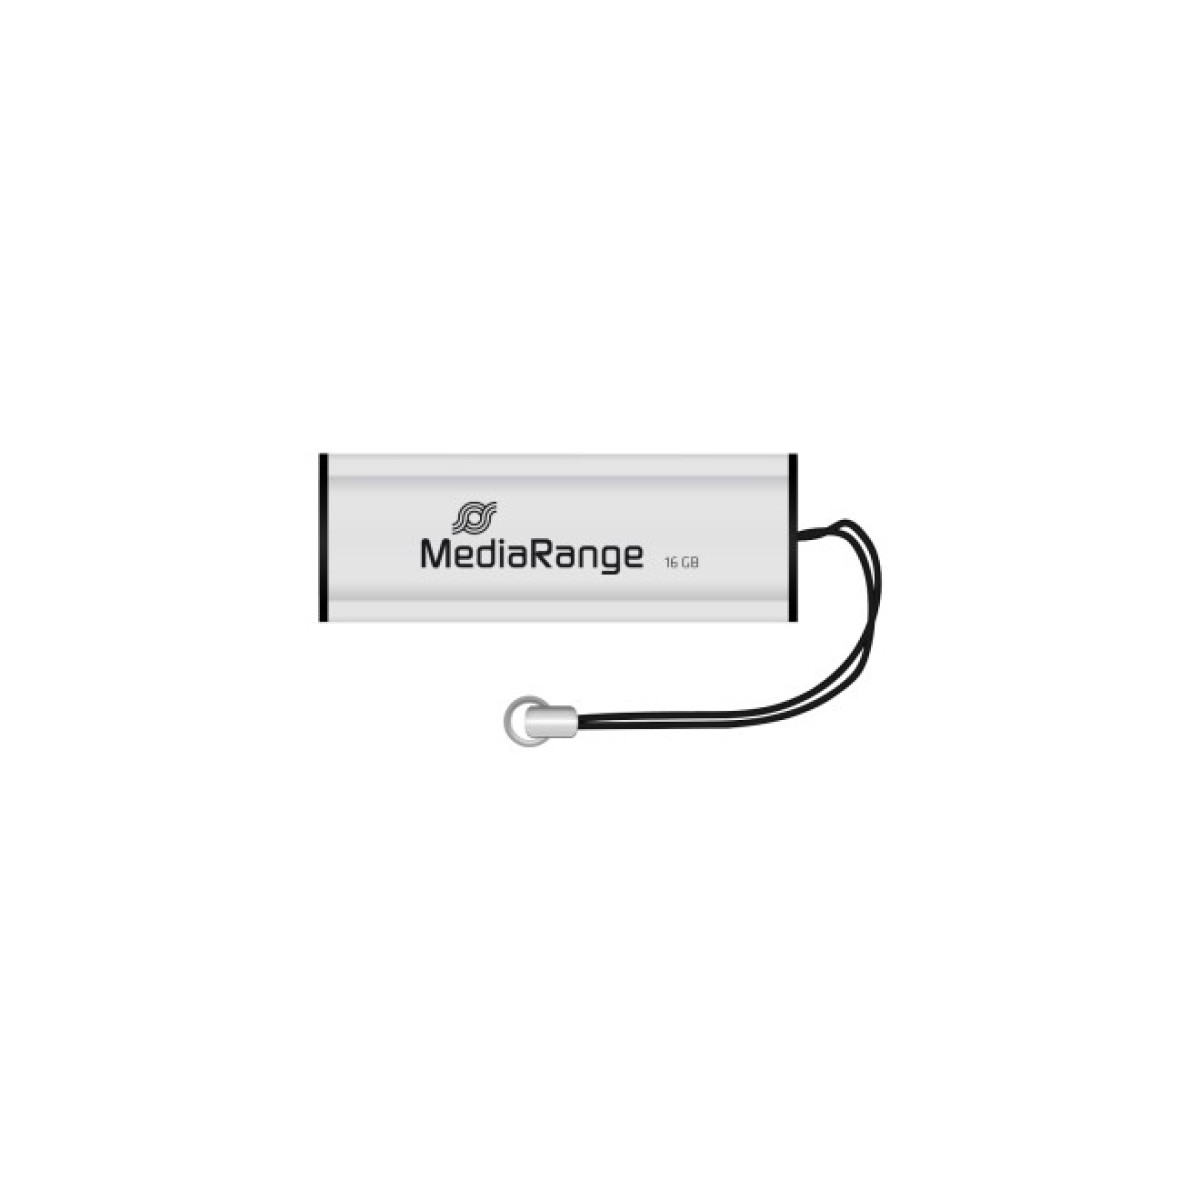 USB флеш накопитель Mediarange 16GB Black/Silver USB 3.0 (MR915) 256_256.jpg